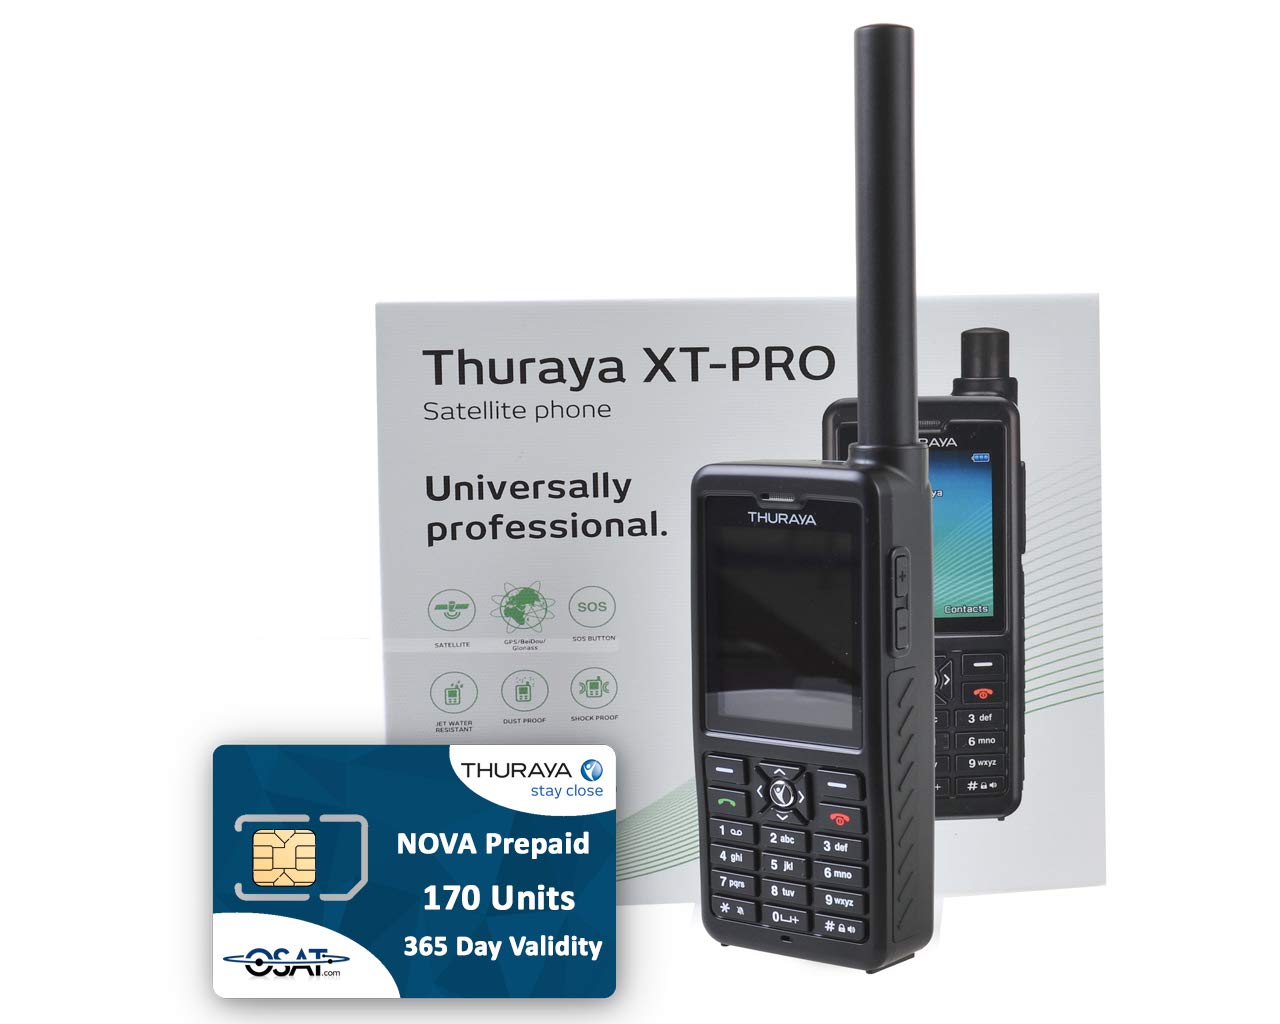 OSAT Thuraya XT Pro Satellite Phone & NOVA SIM with 170 Units (200 Minutes) with 365 Day Validity